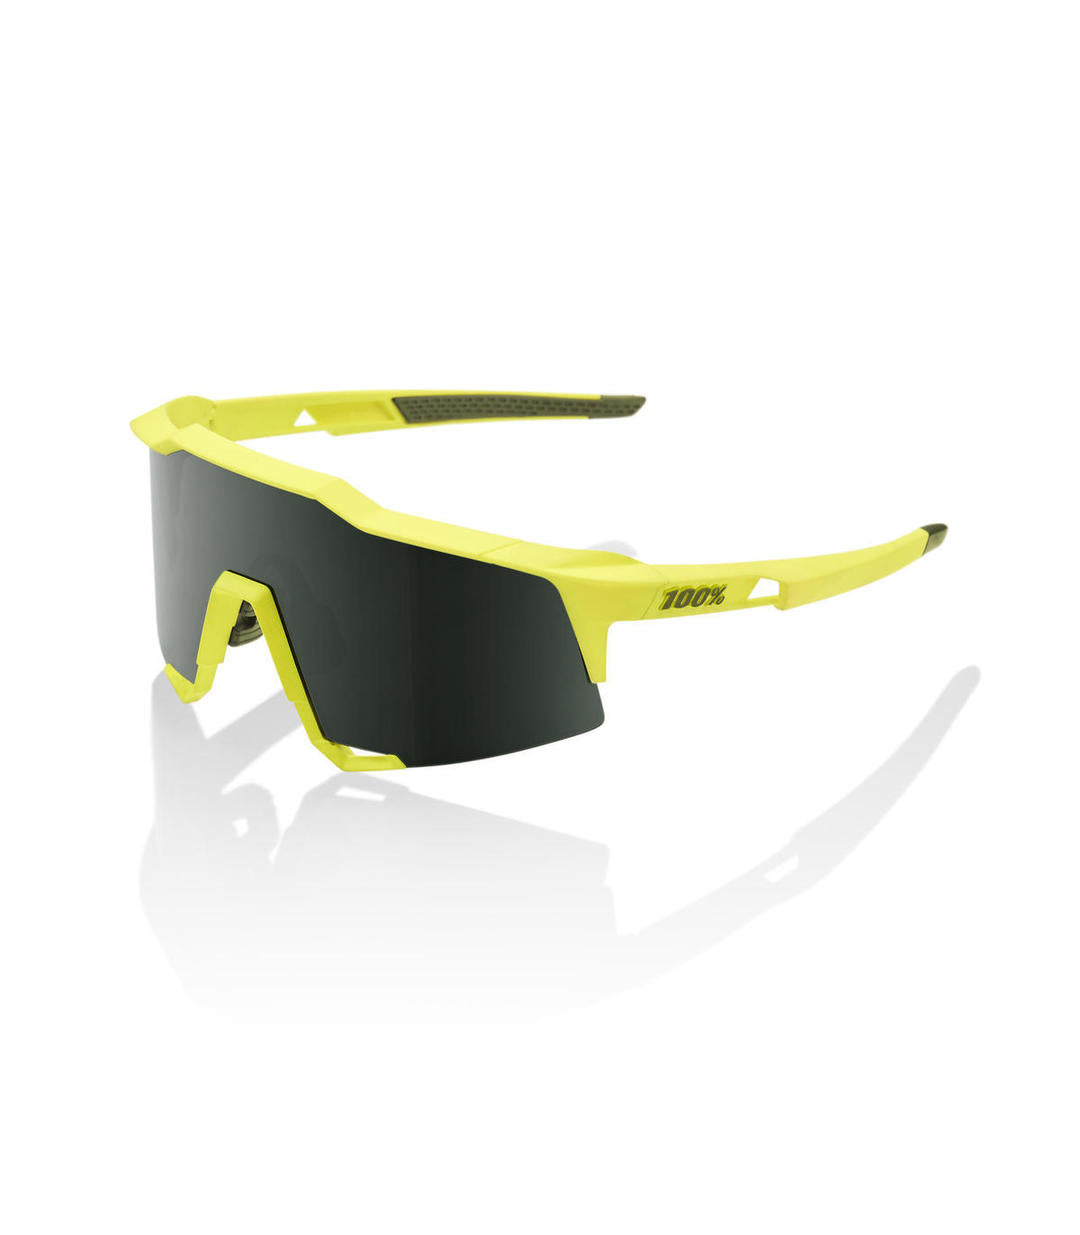 RIDE 100% Eyewear Speedcraft - Soft Tact Banana Grey Green Lens